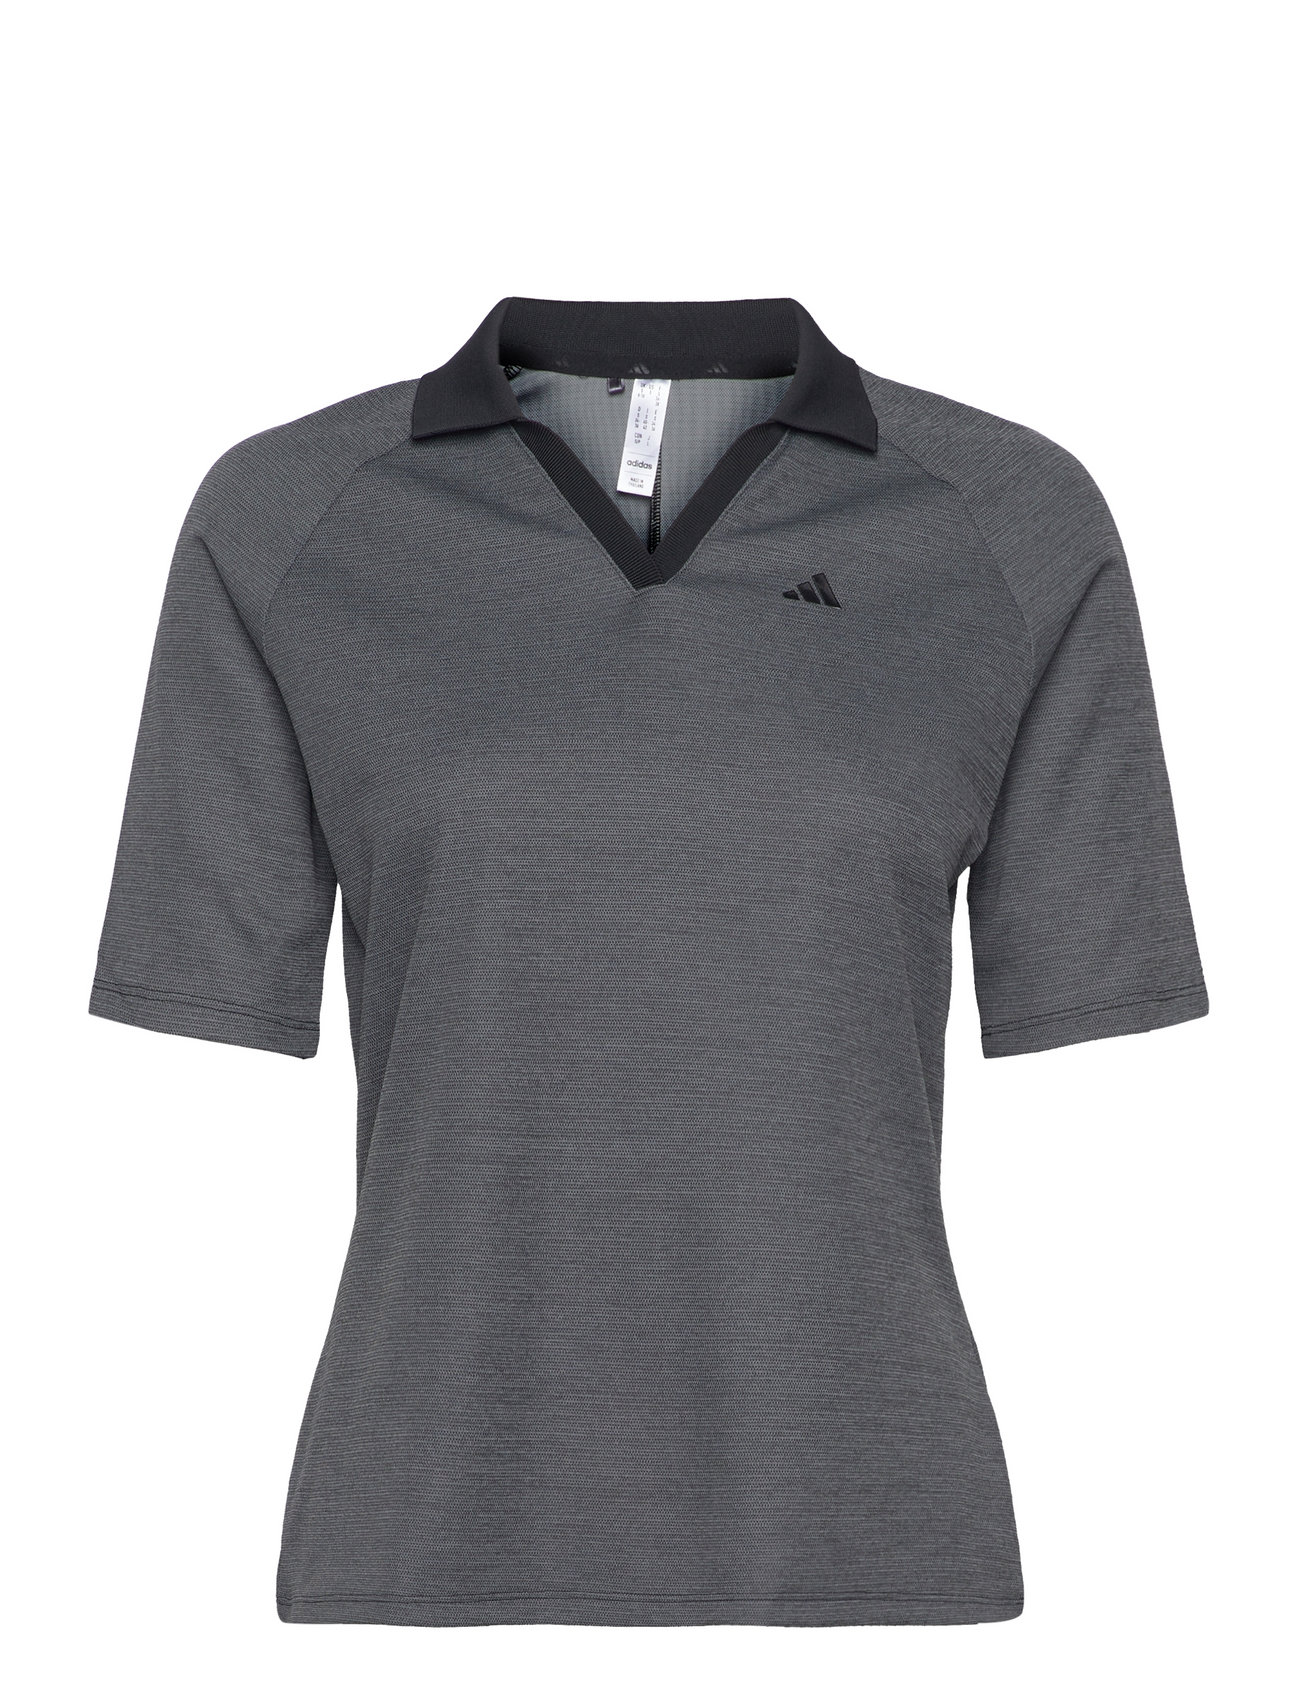 W No Show Ss P Sport T-shirts & Tops Polos Grey Adidas Golf